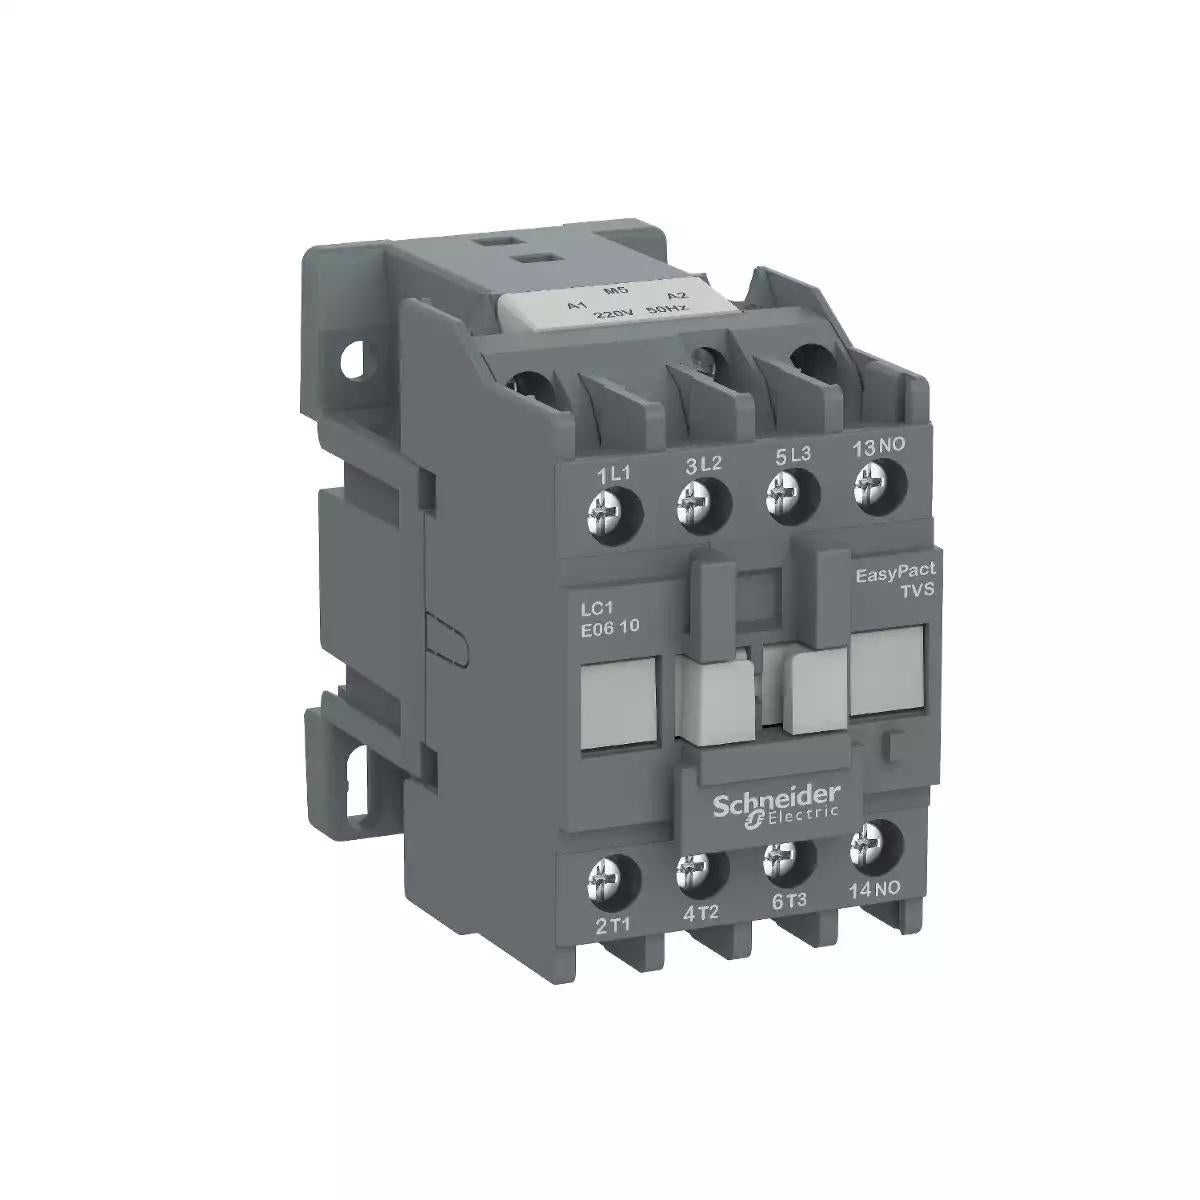 Contactor,EasyPact TVS,3P(3NO),AC-3,<=440V,18A,24V AC coil,50/60Hz,1NO auxiliary contact